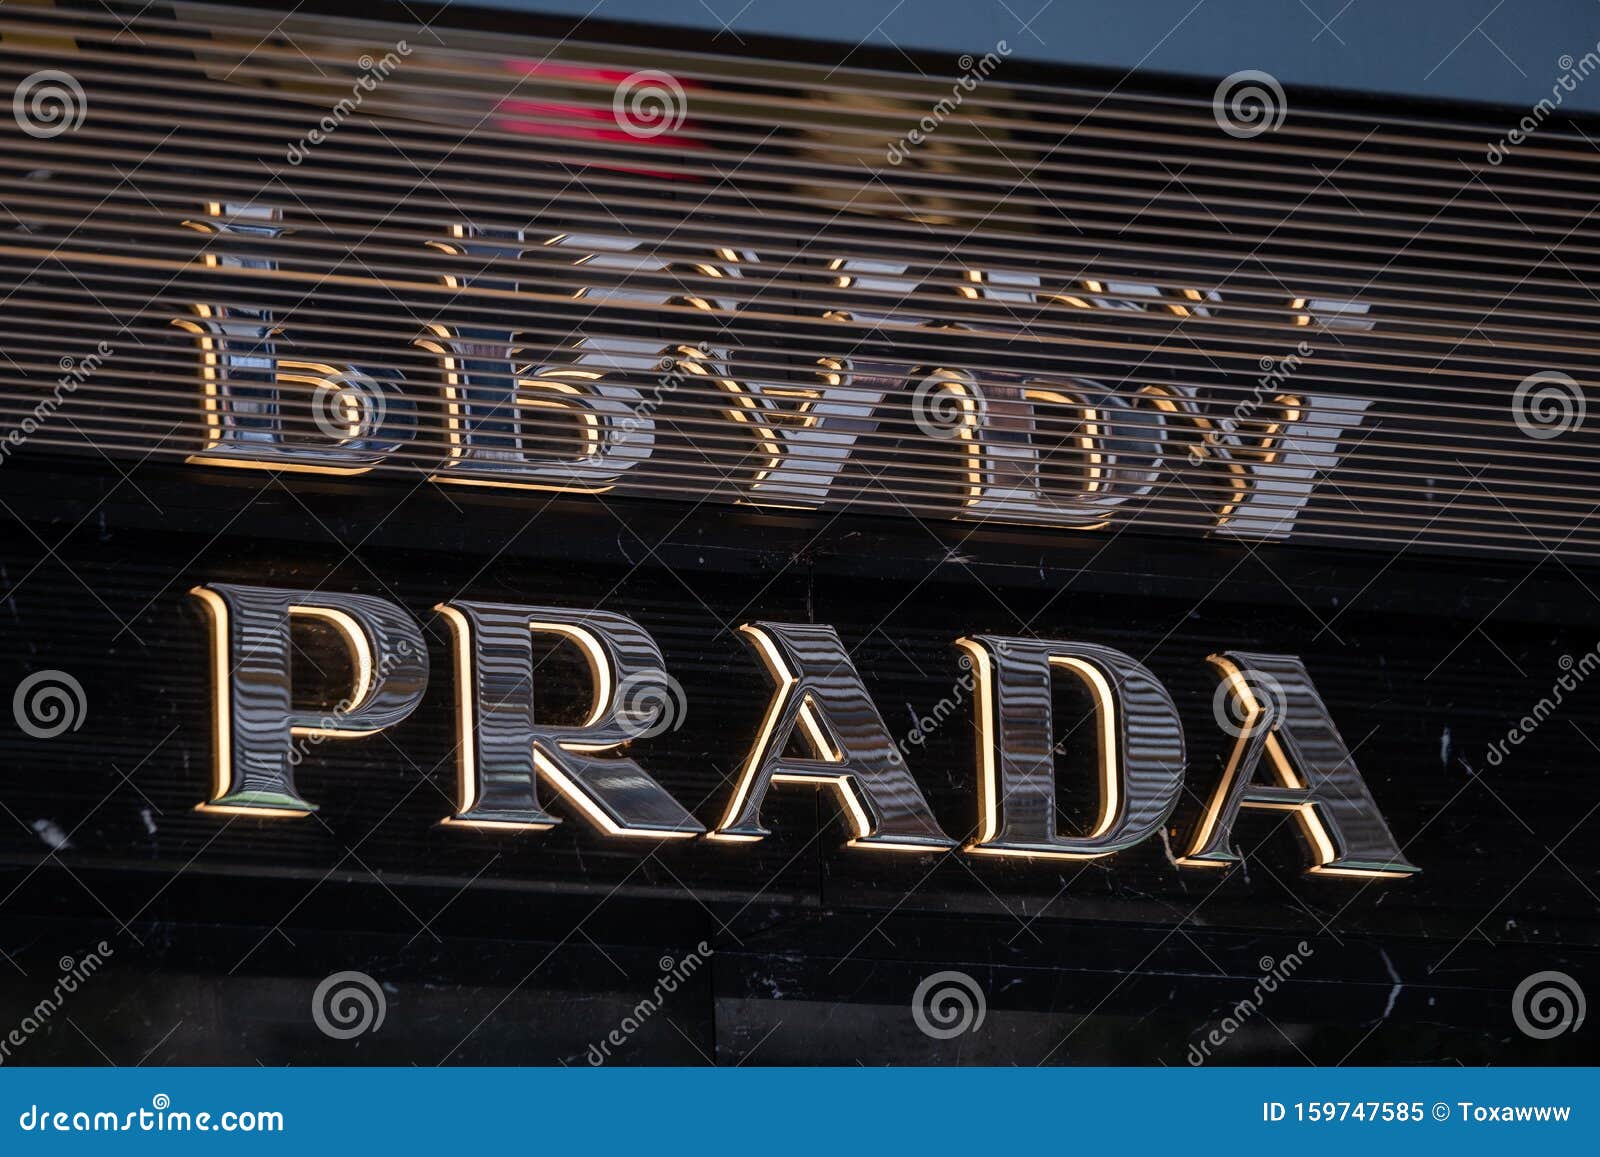 Prada Logo at the Brand Store Facade Editorial Image - Image of luxury,  embleme: 159747585